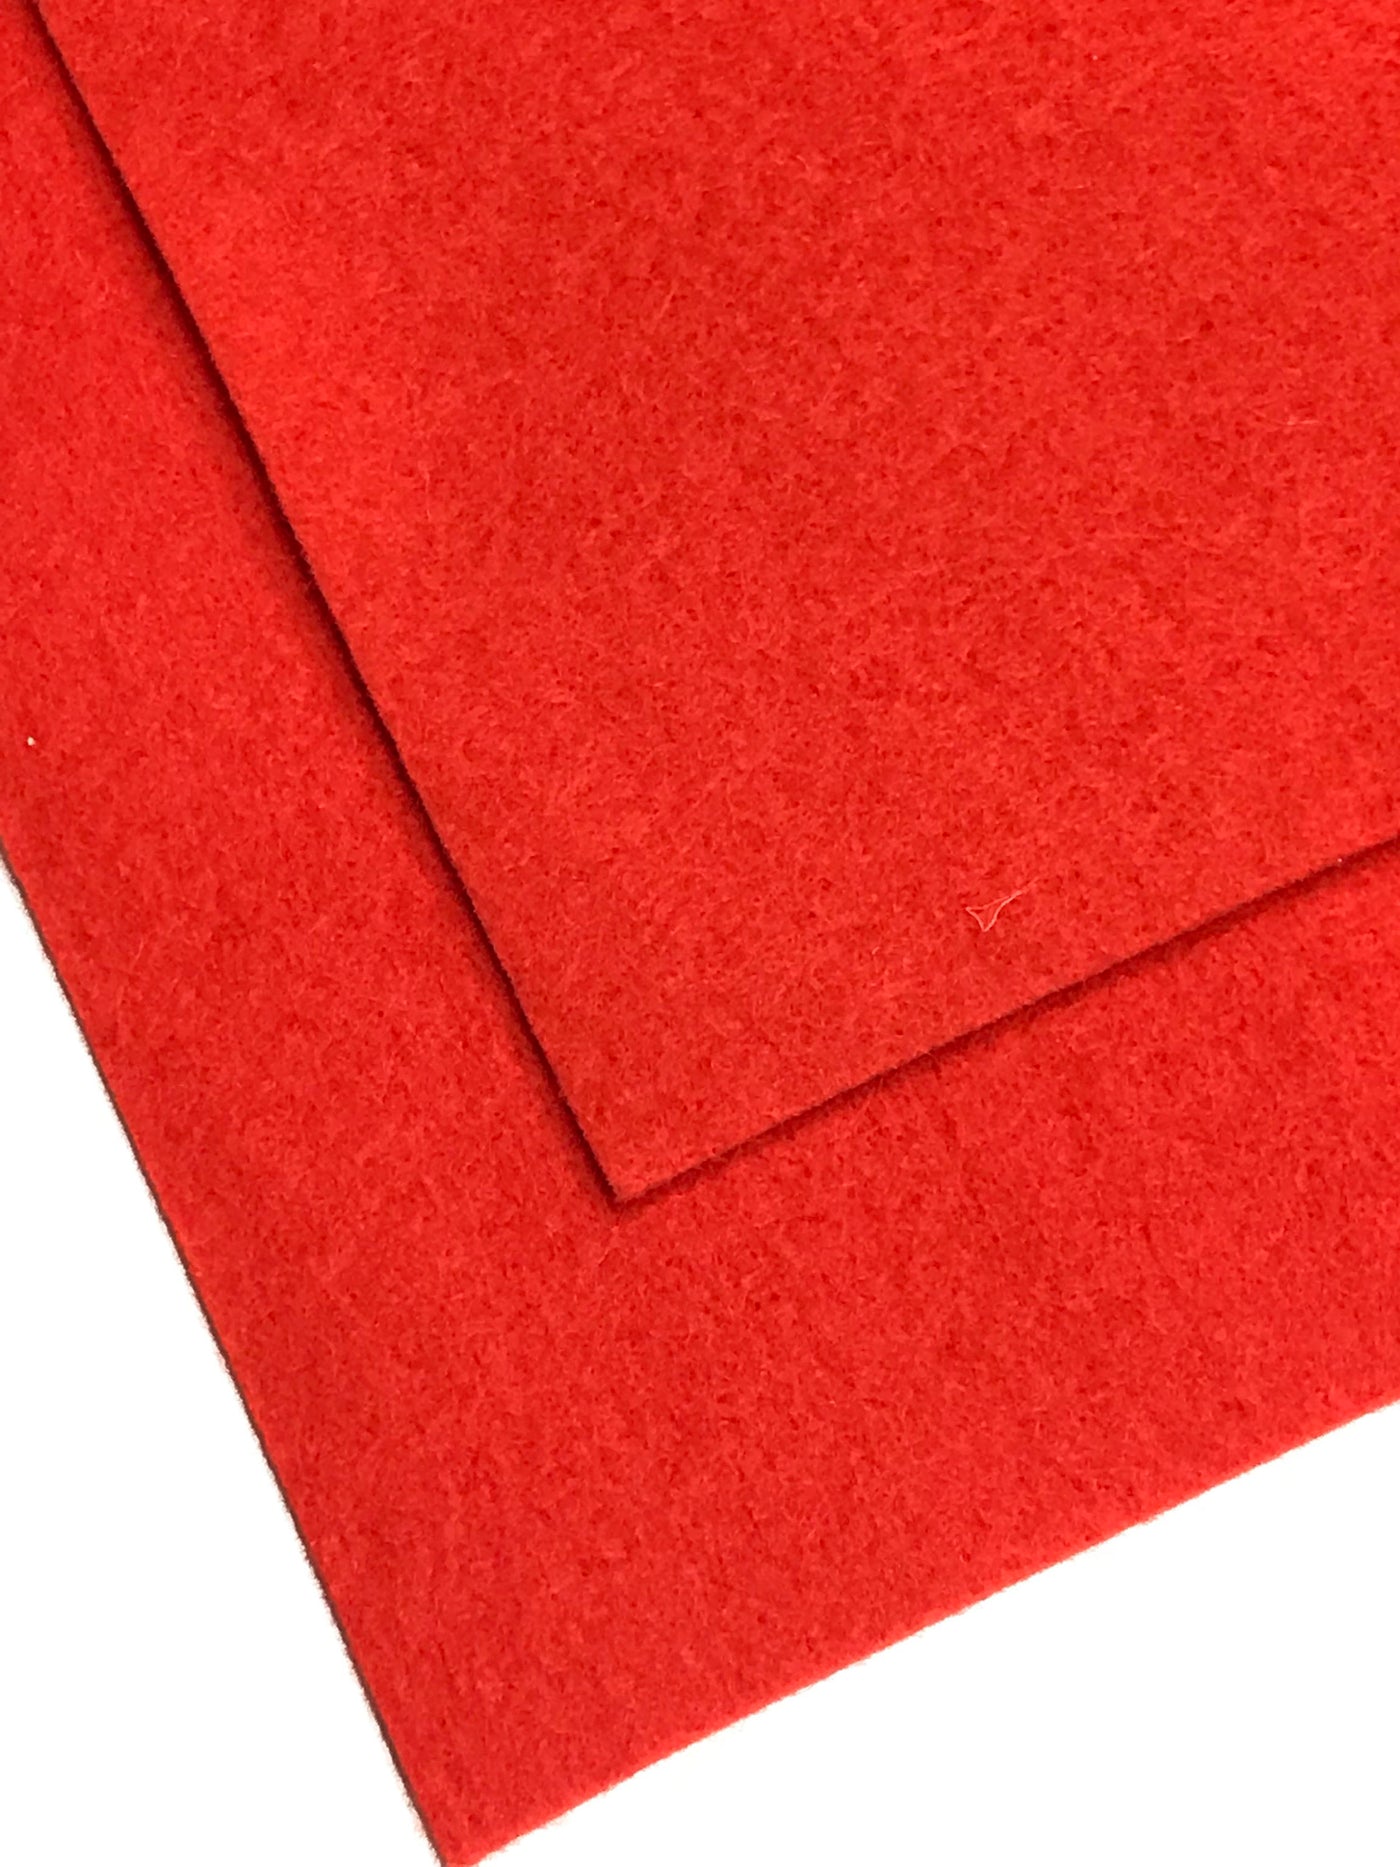 1mm Orange Red Merino Wool Felt 8 x 11" Sheet - No. 6